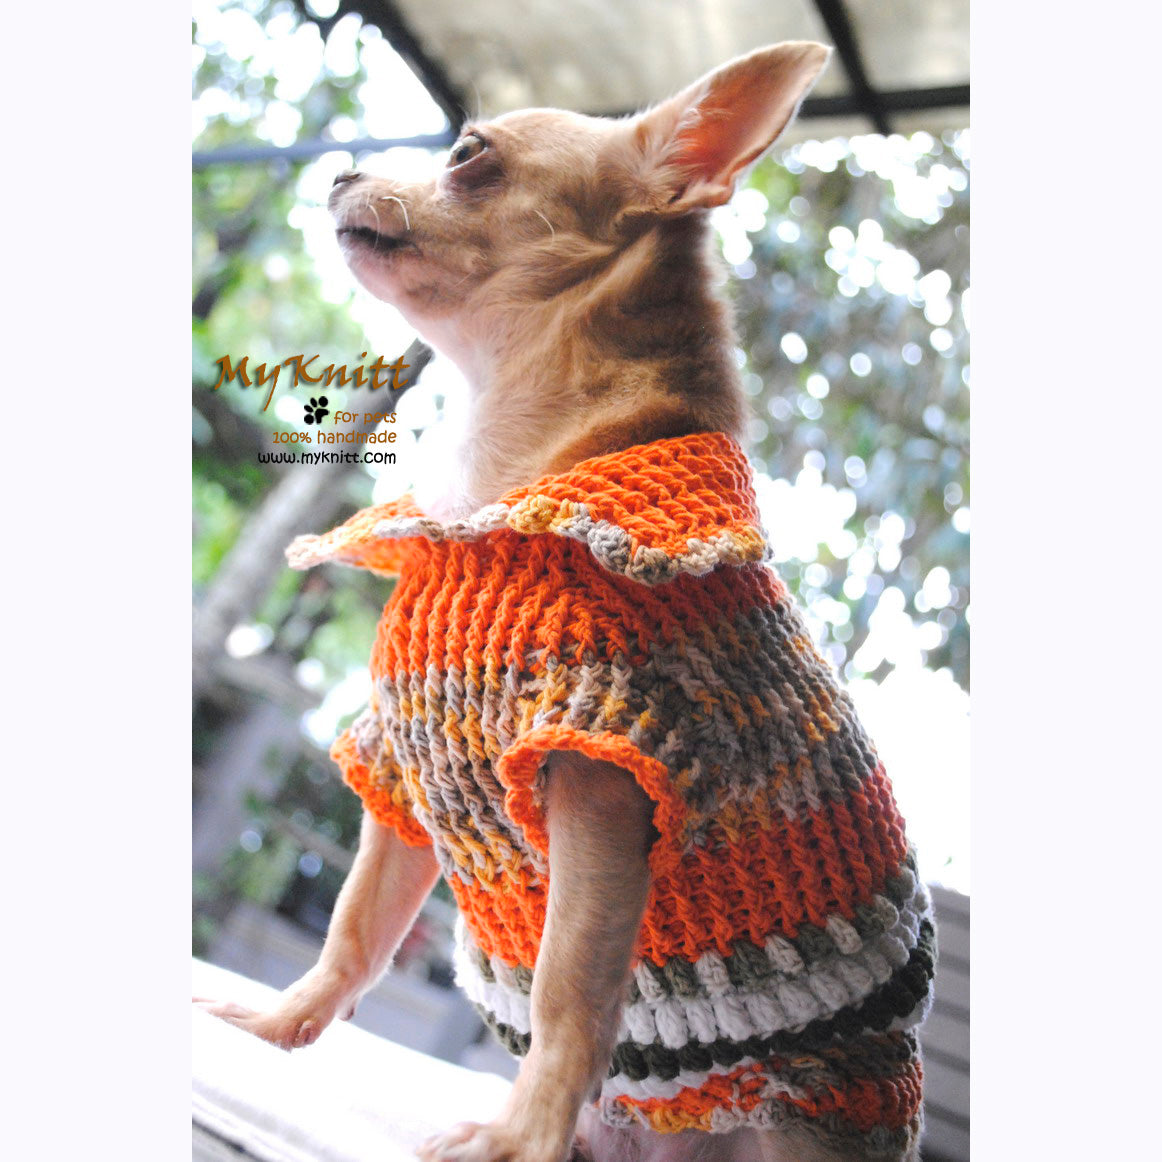 Puffy Orange Olive Knitted Chihuahua Sweater DK868 by Myknitt